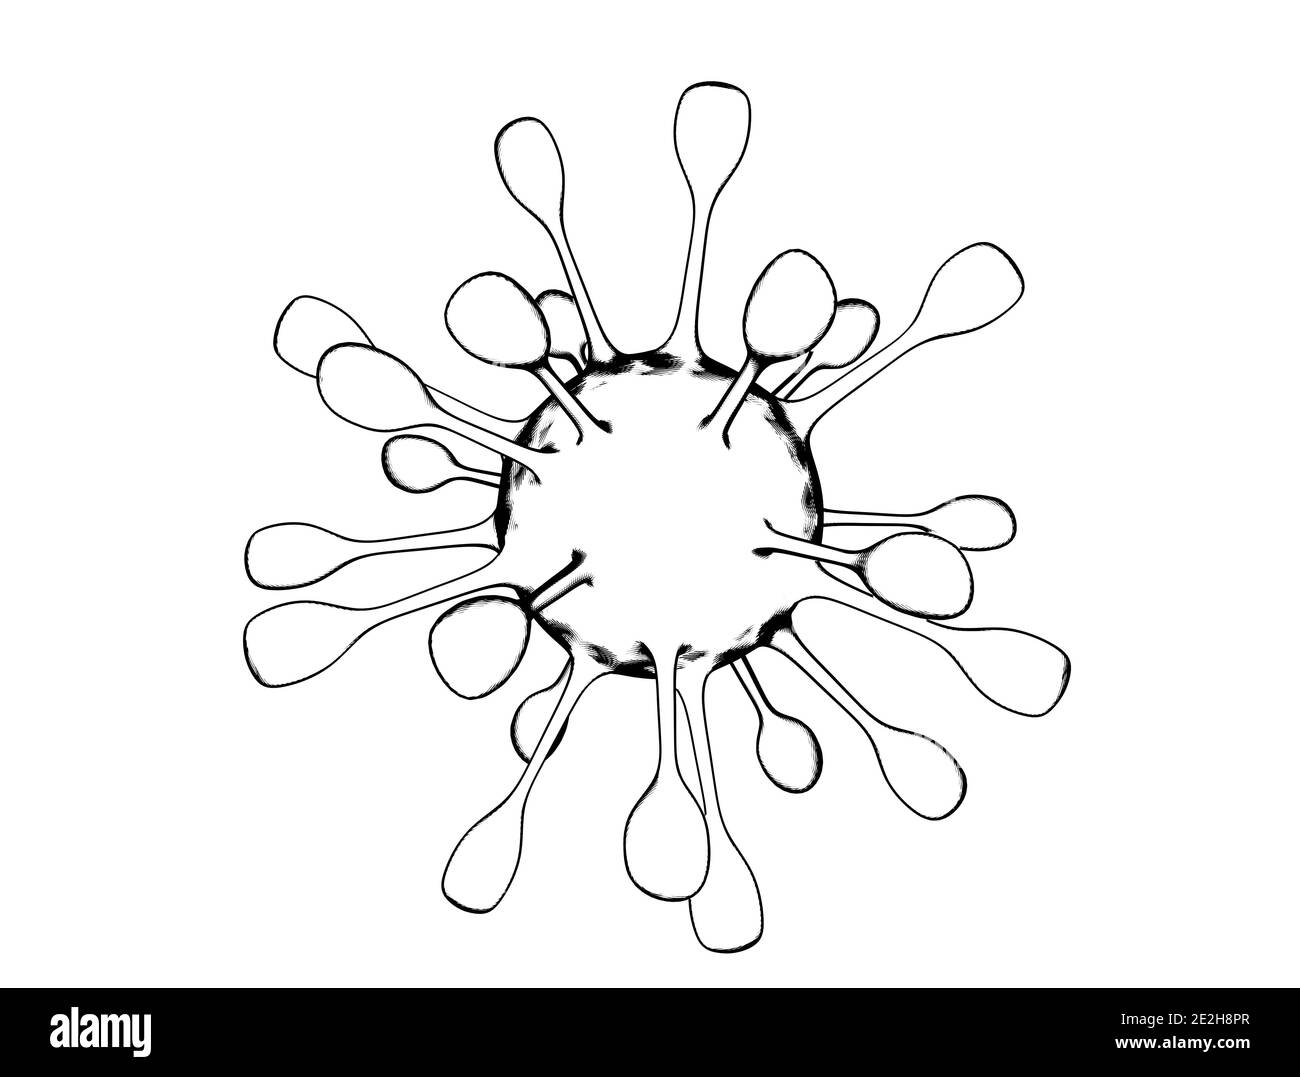 Influenza virus drawing Imágenes de stock en blanco y negro - Alamy